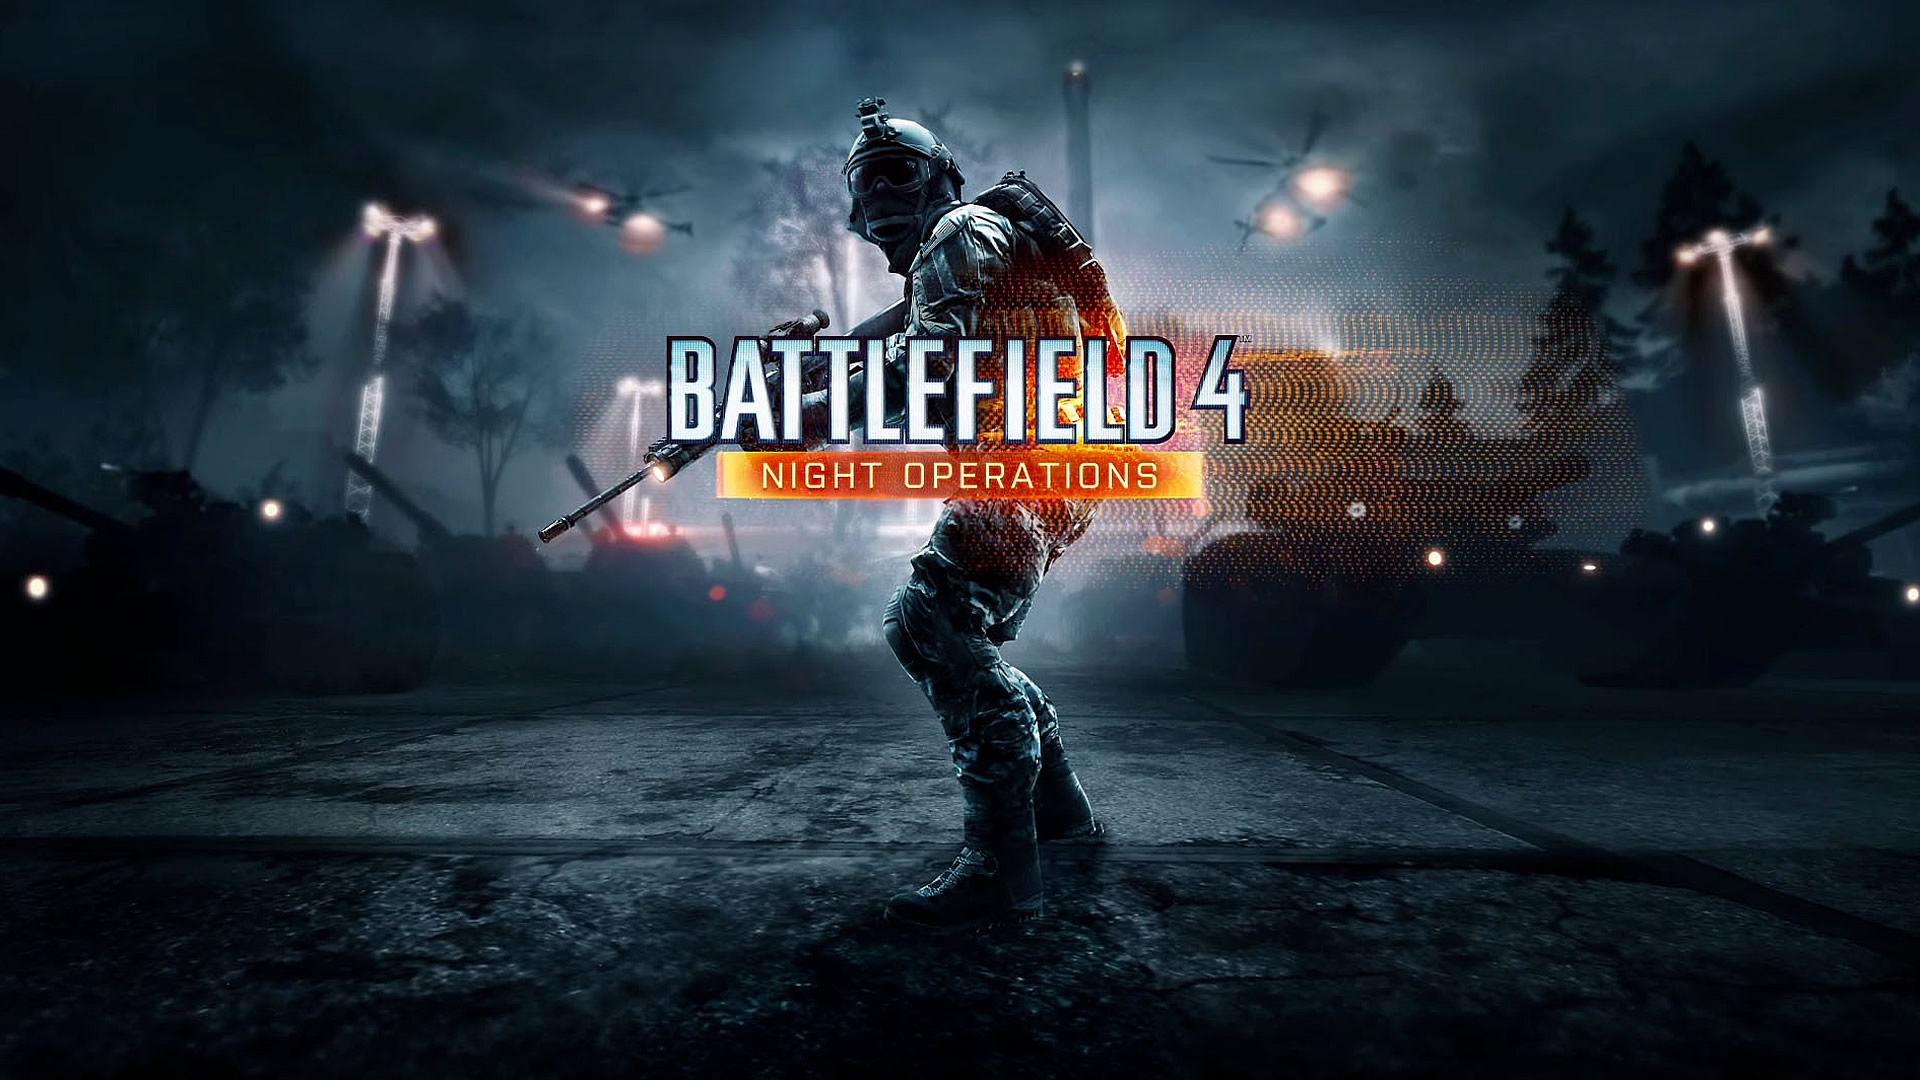 Battlefield Hd Wallpapers Backgrounds Wallpaper - Battlefield 4 Night Operations - HD Wallpaper 